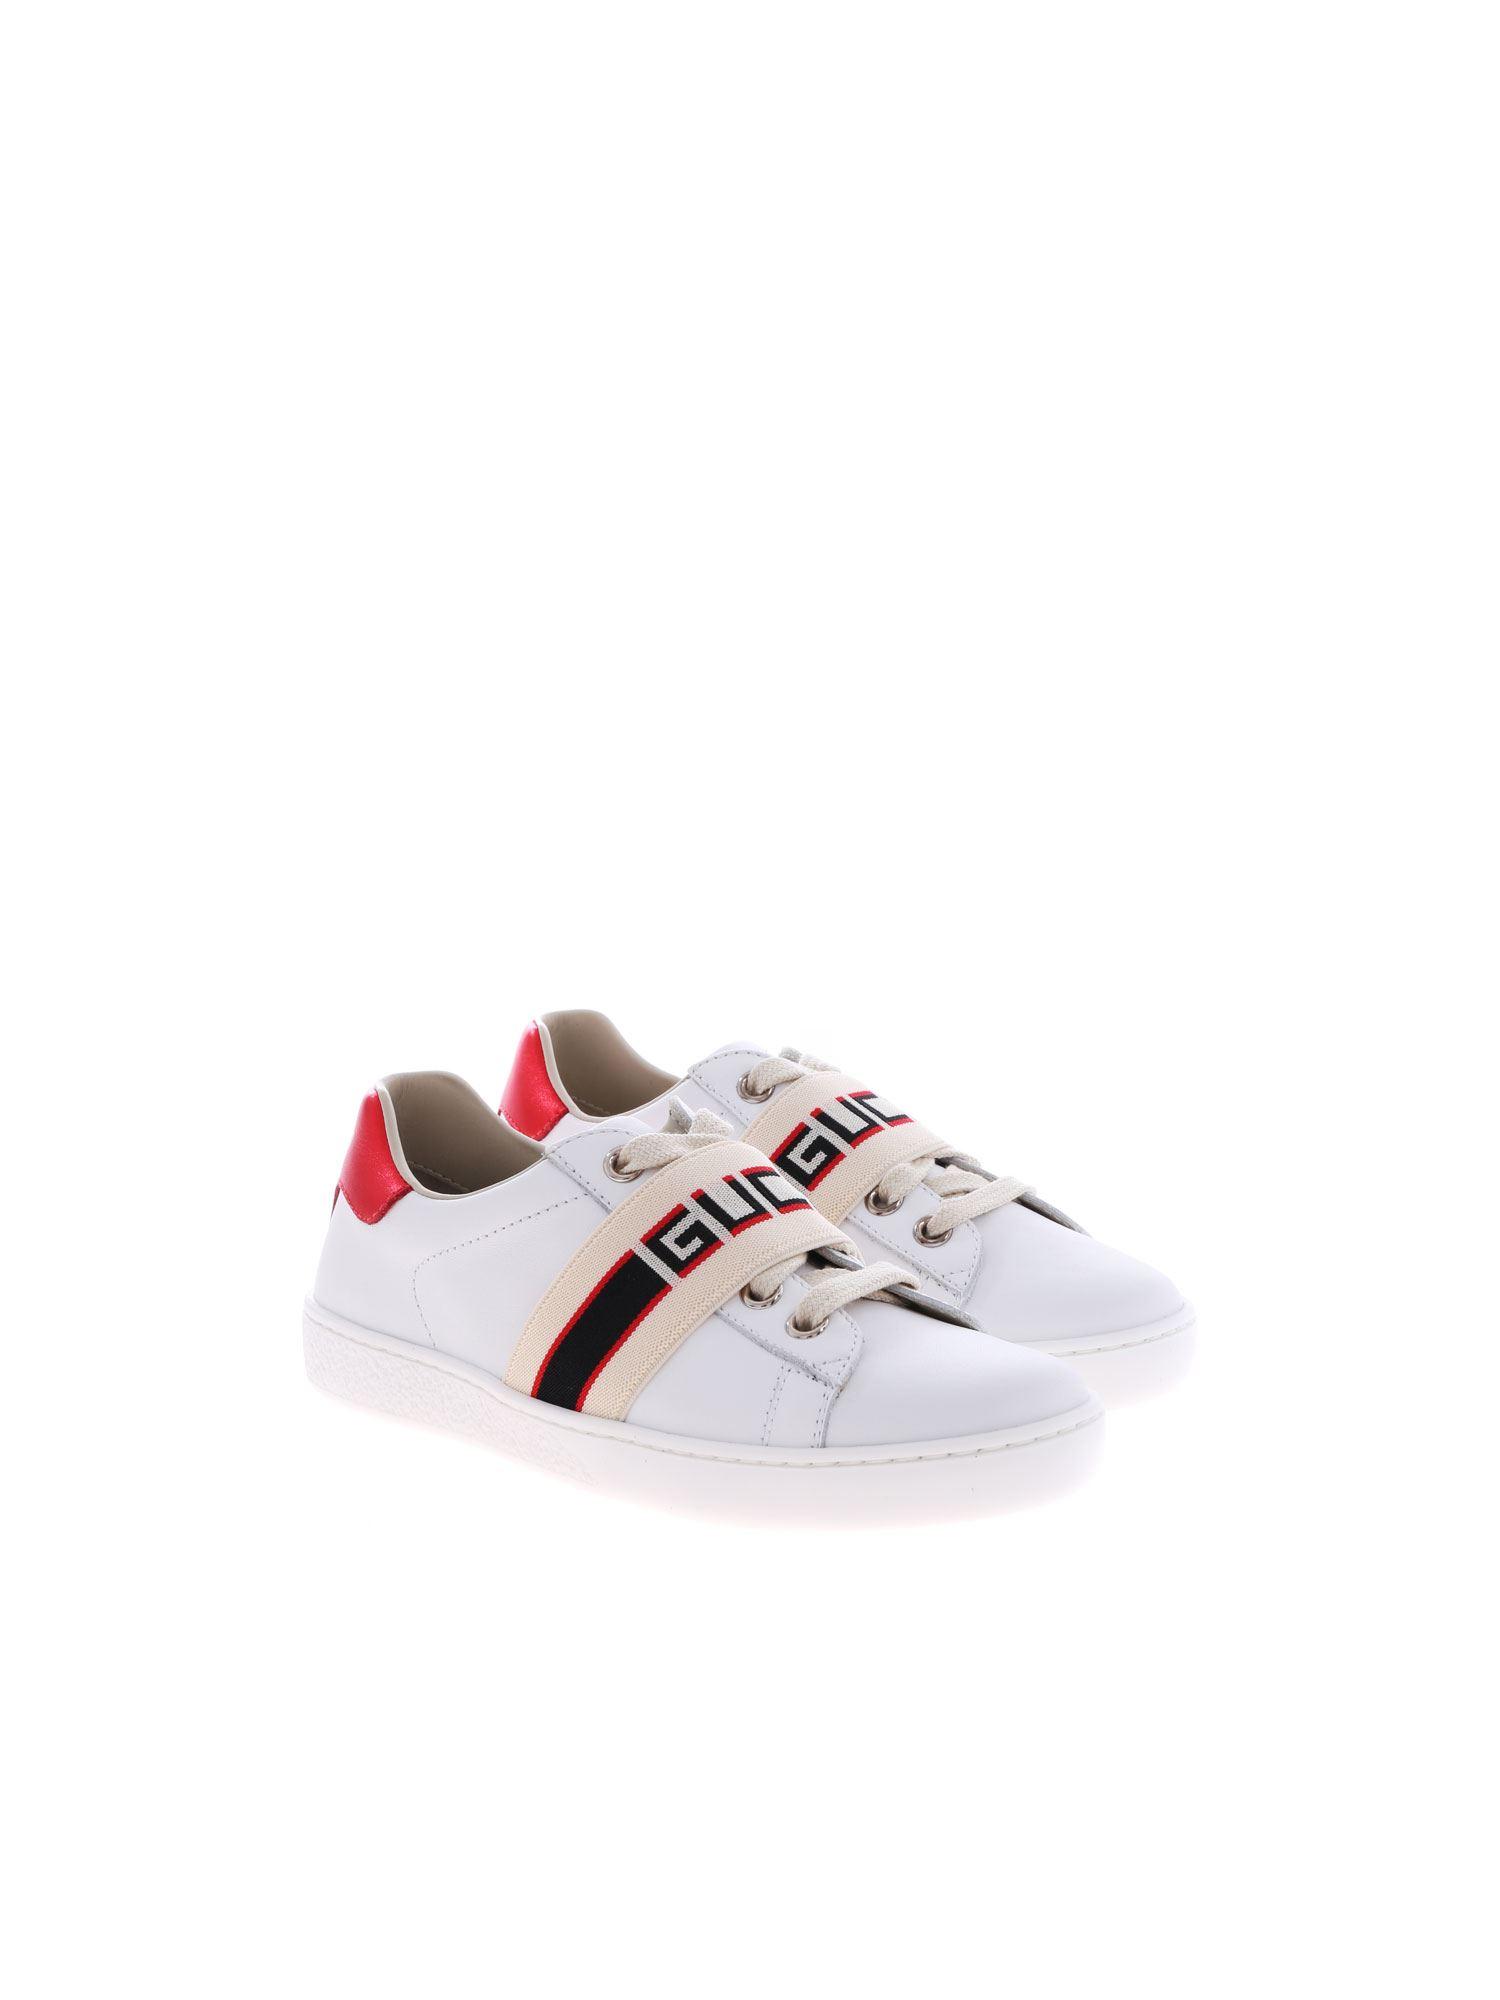 gucci white sneakers